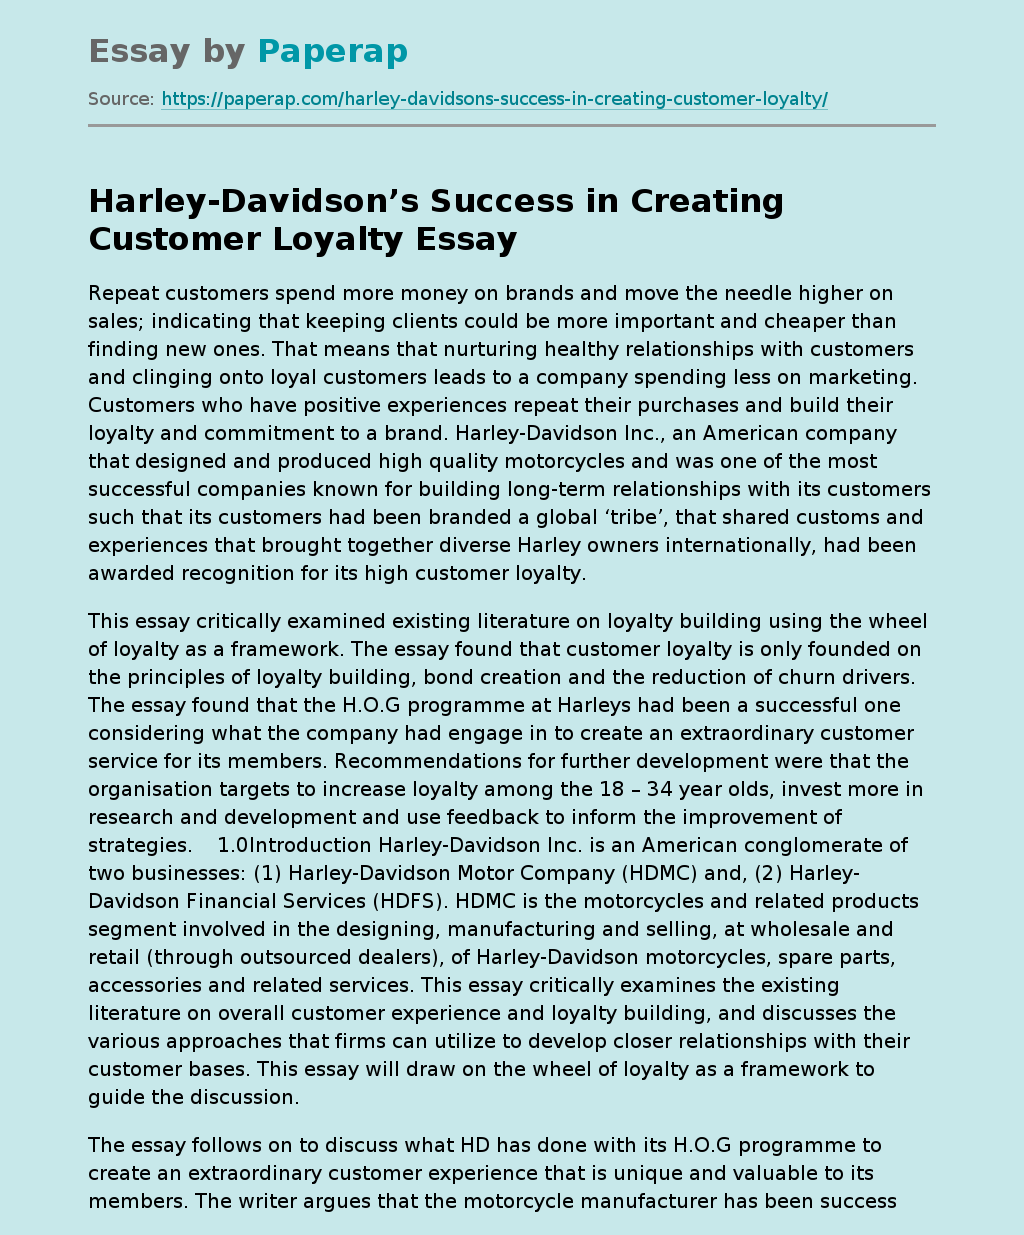 Harley-Davidson’s Success in Creating Customer Loyalty